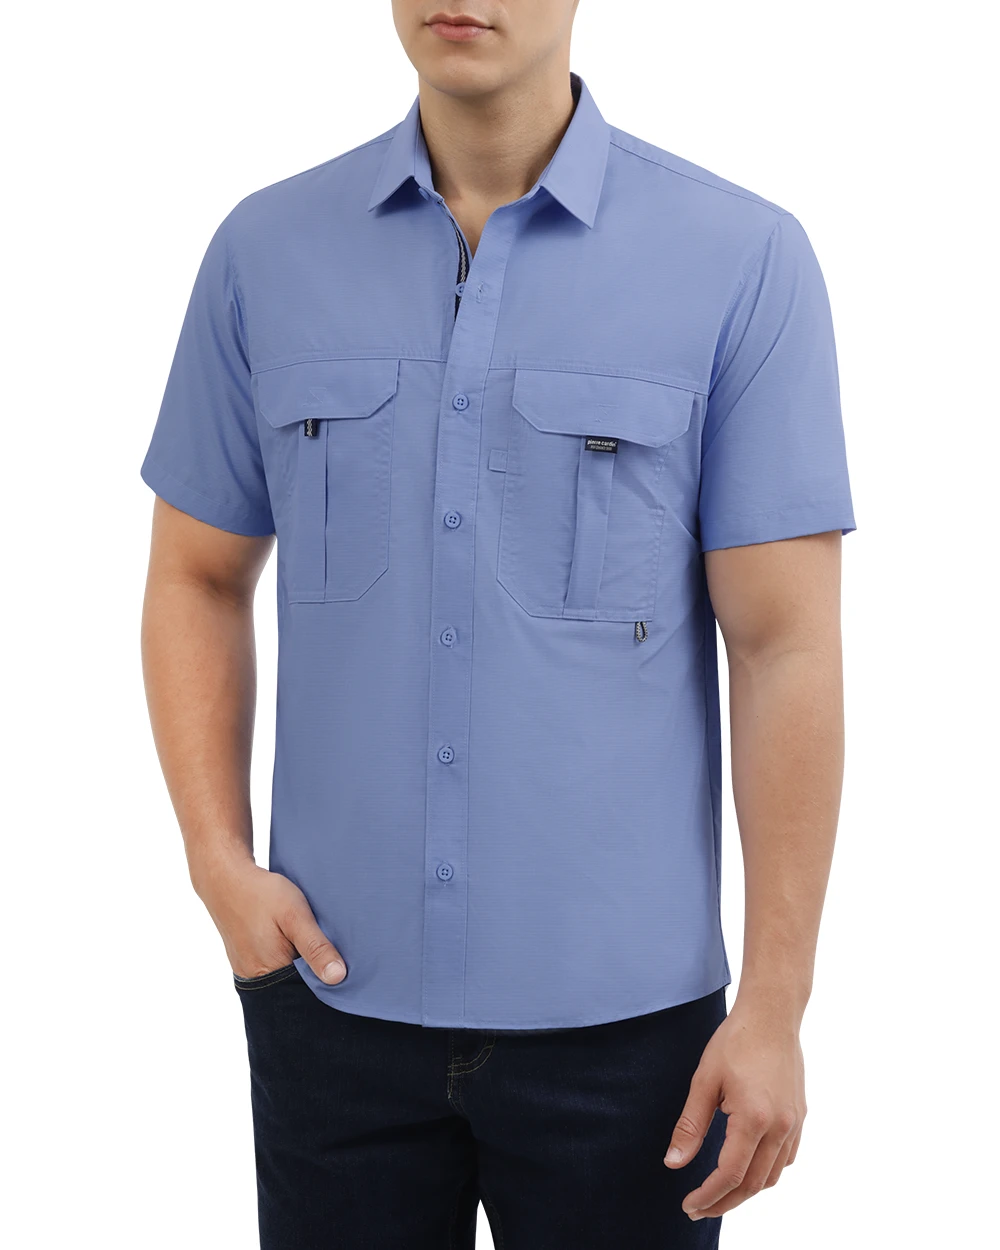 Camisa casual performance azul navy manga corta slim fit celeste